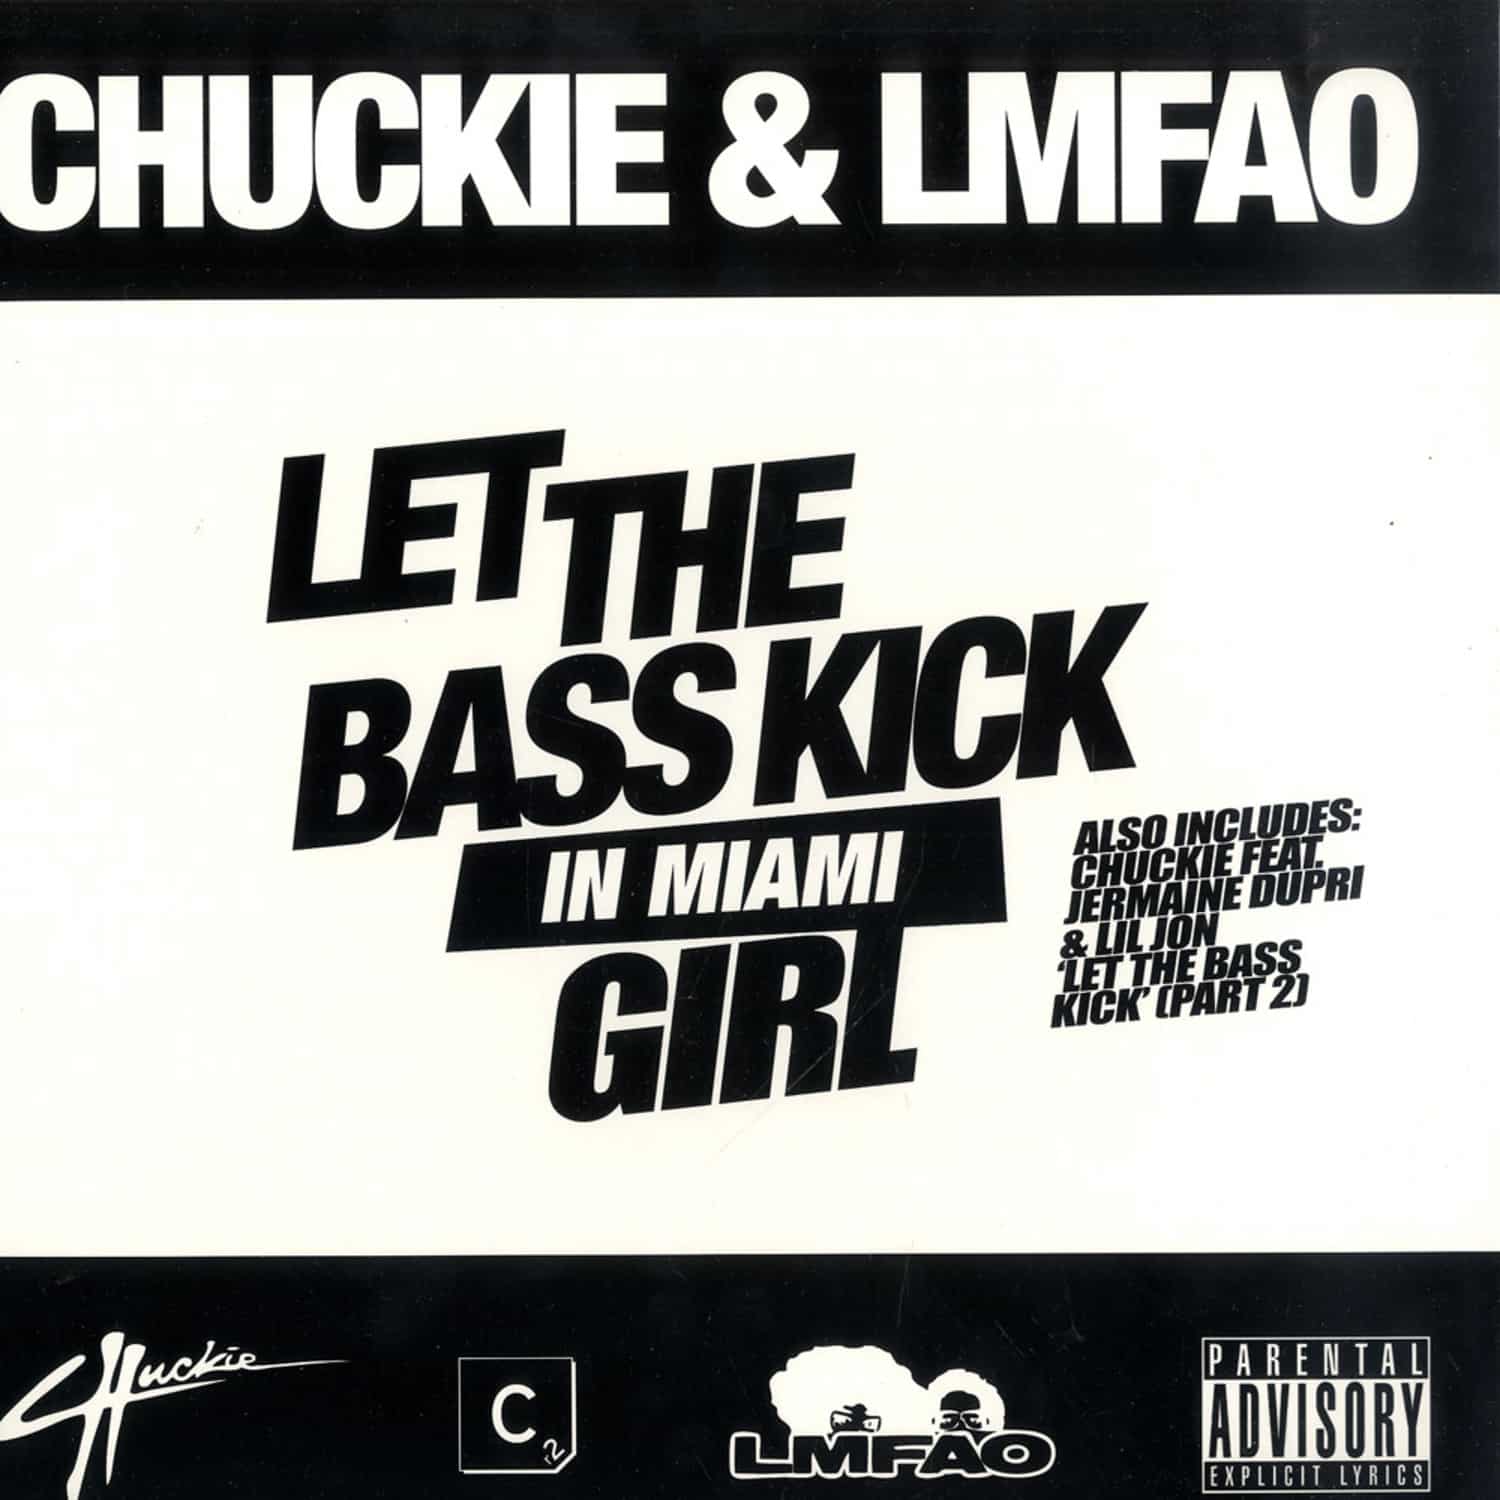 Chuckie & Lmfao - LET THE BASS KICK IN MIAMI GIRL